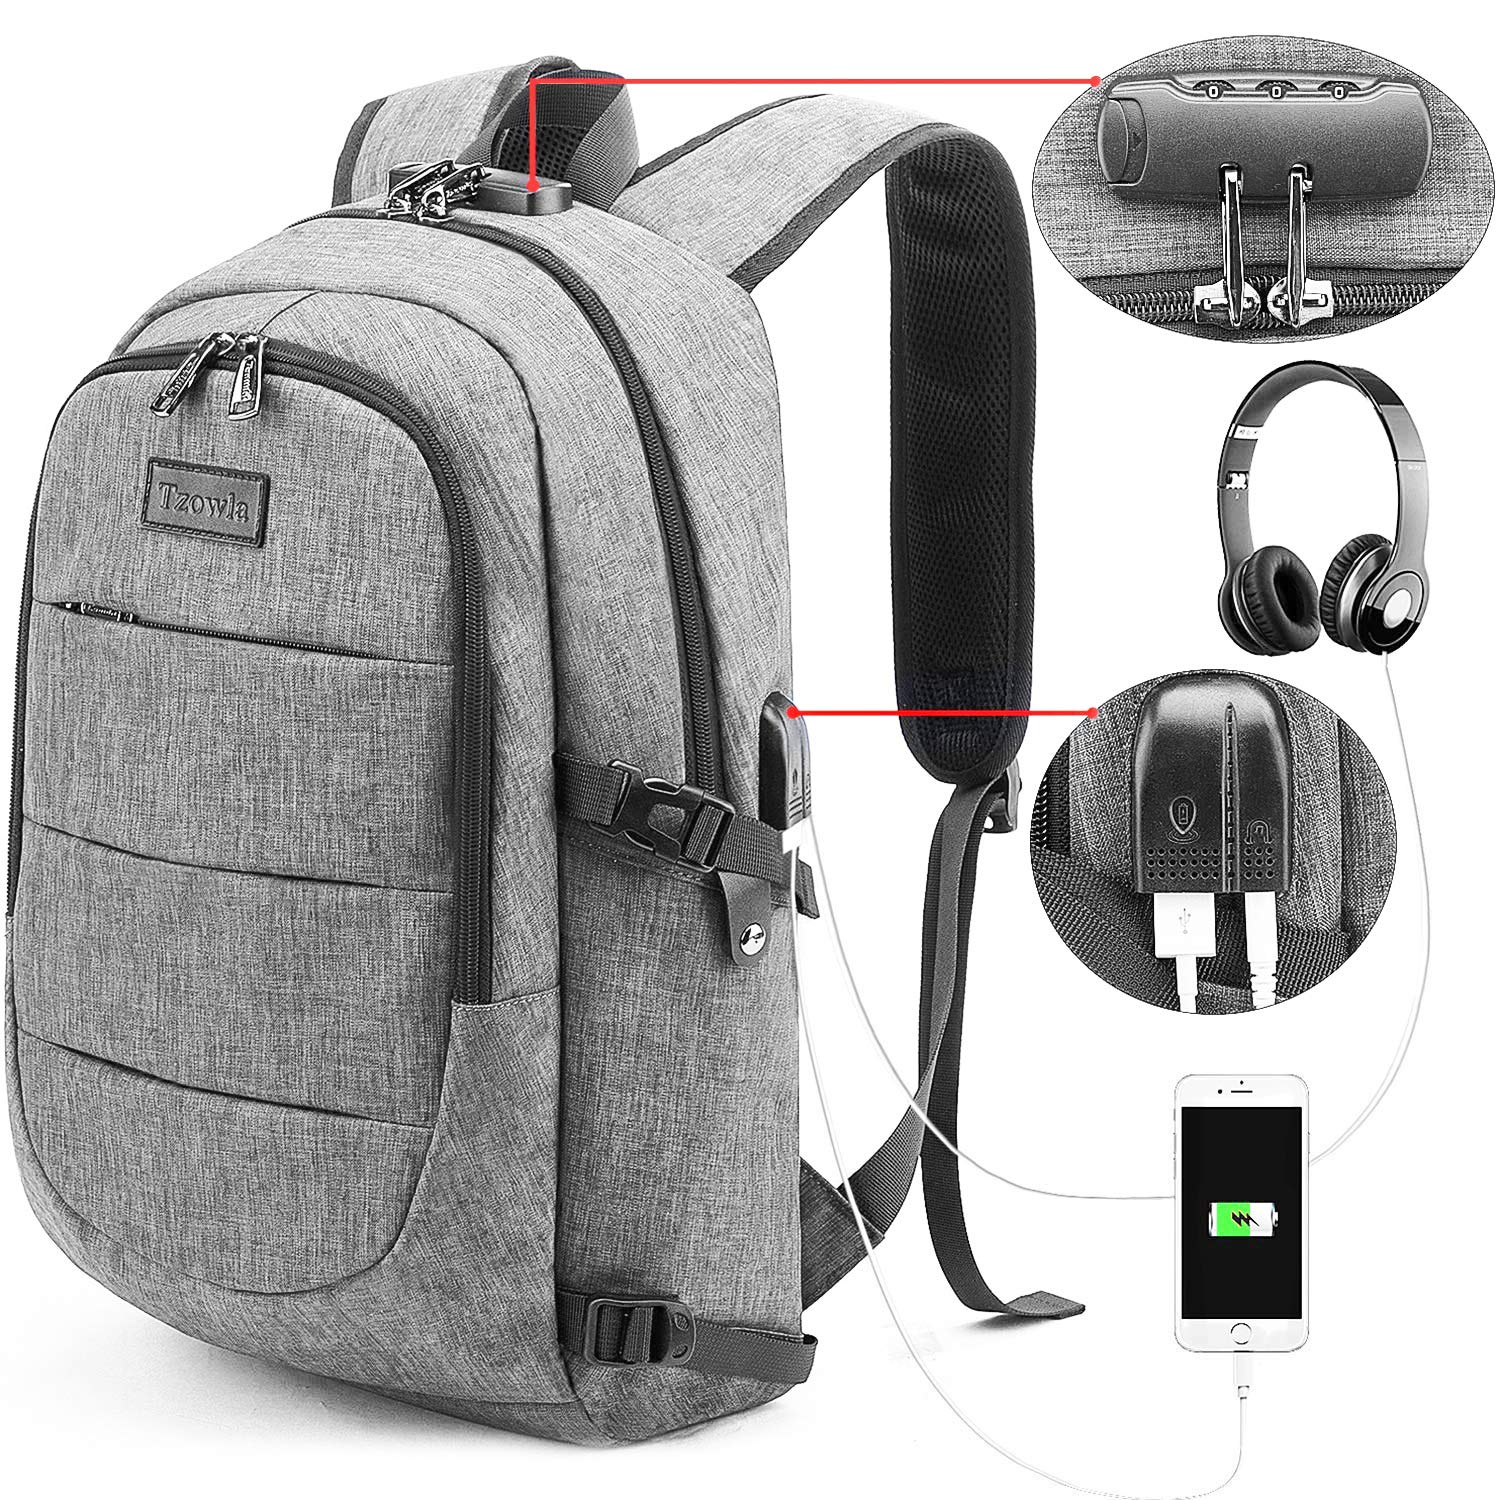 College School Laptop Backpack Water Resistant Anti-Theft Bag $37.99 (REG $68.99)